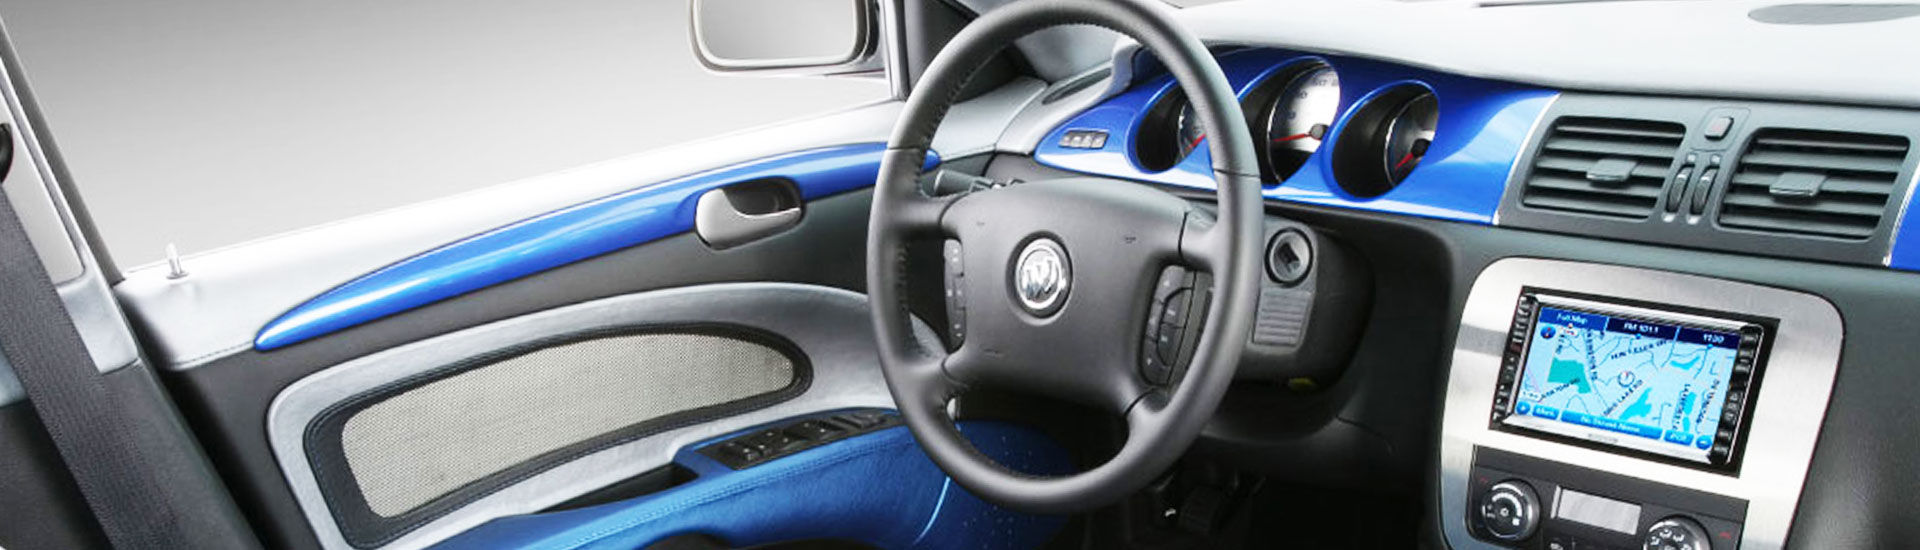 2020 Buick Regal Custom Dash Kits